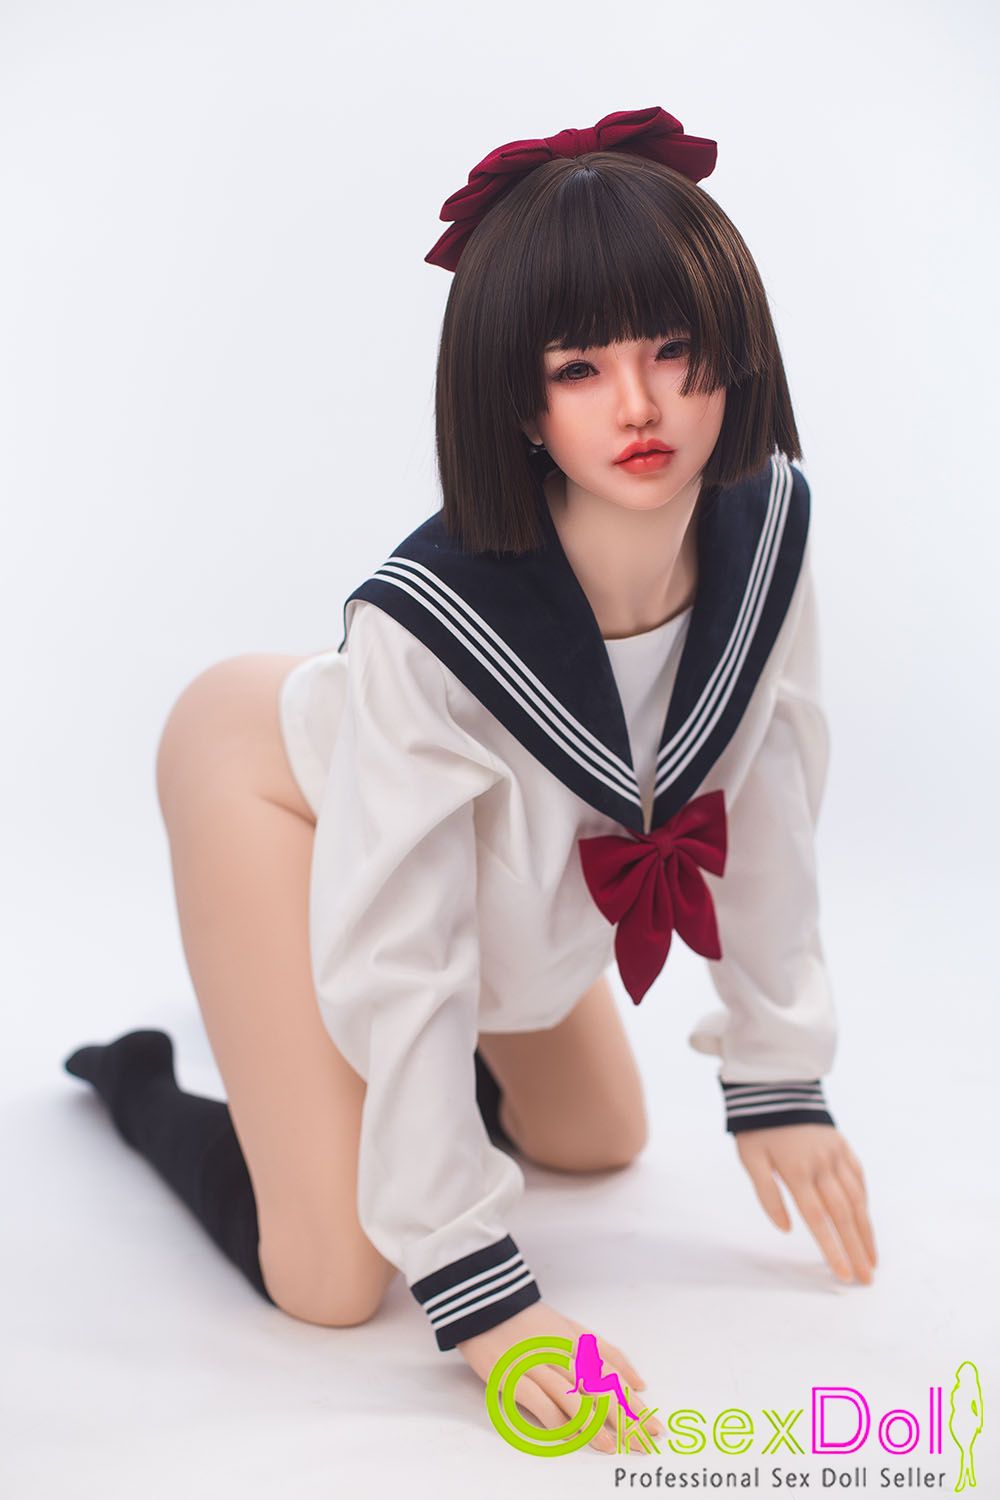 Japanese Schoolgirl Sex Doll images